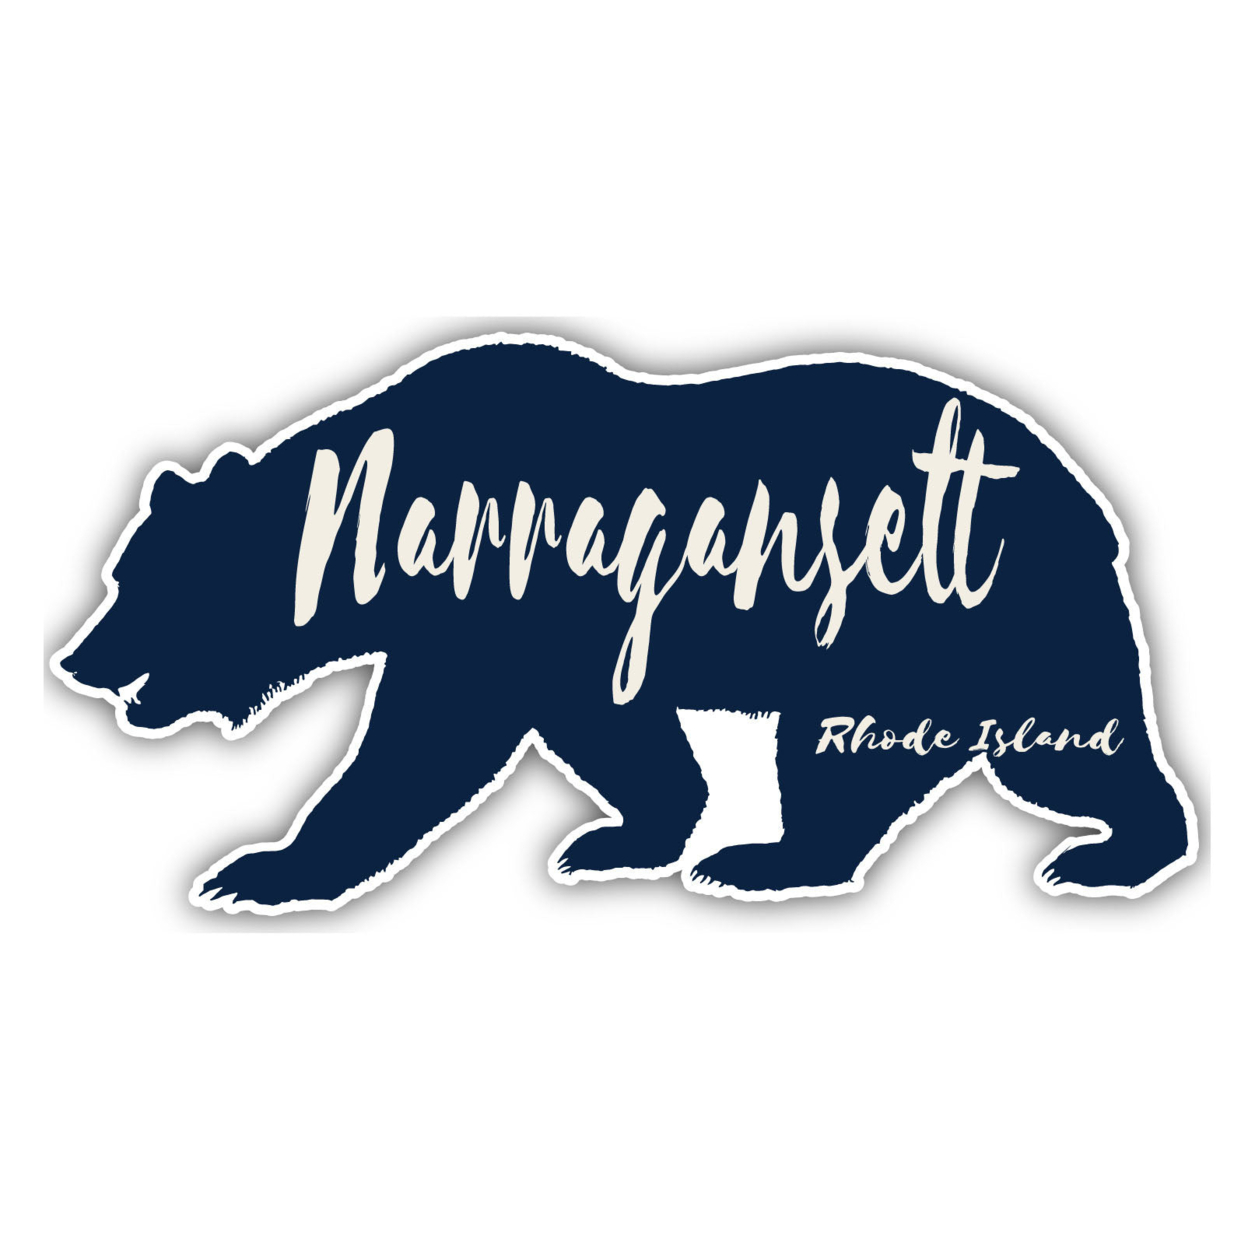 Narragansett Rhode Island Souvenir Decorative Stickers (Choose Theme And Size) - Single Unit, 4-Inch, Camp Life